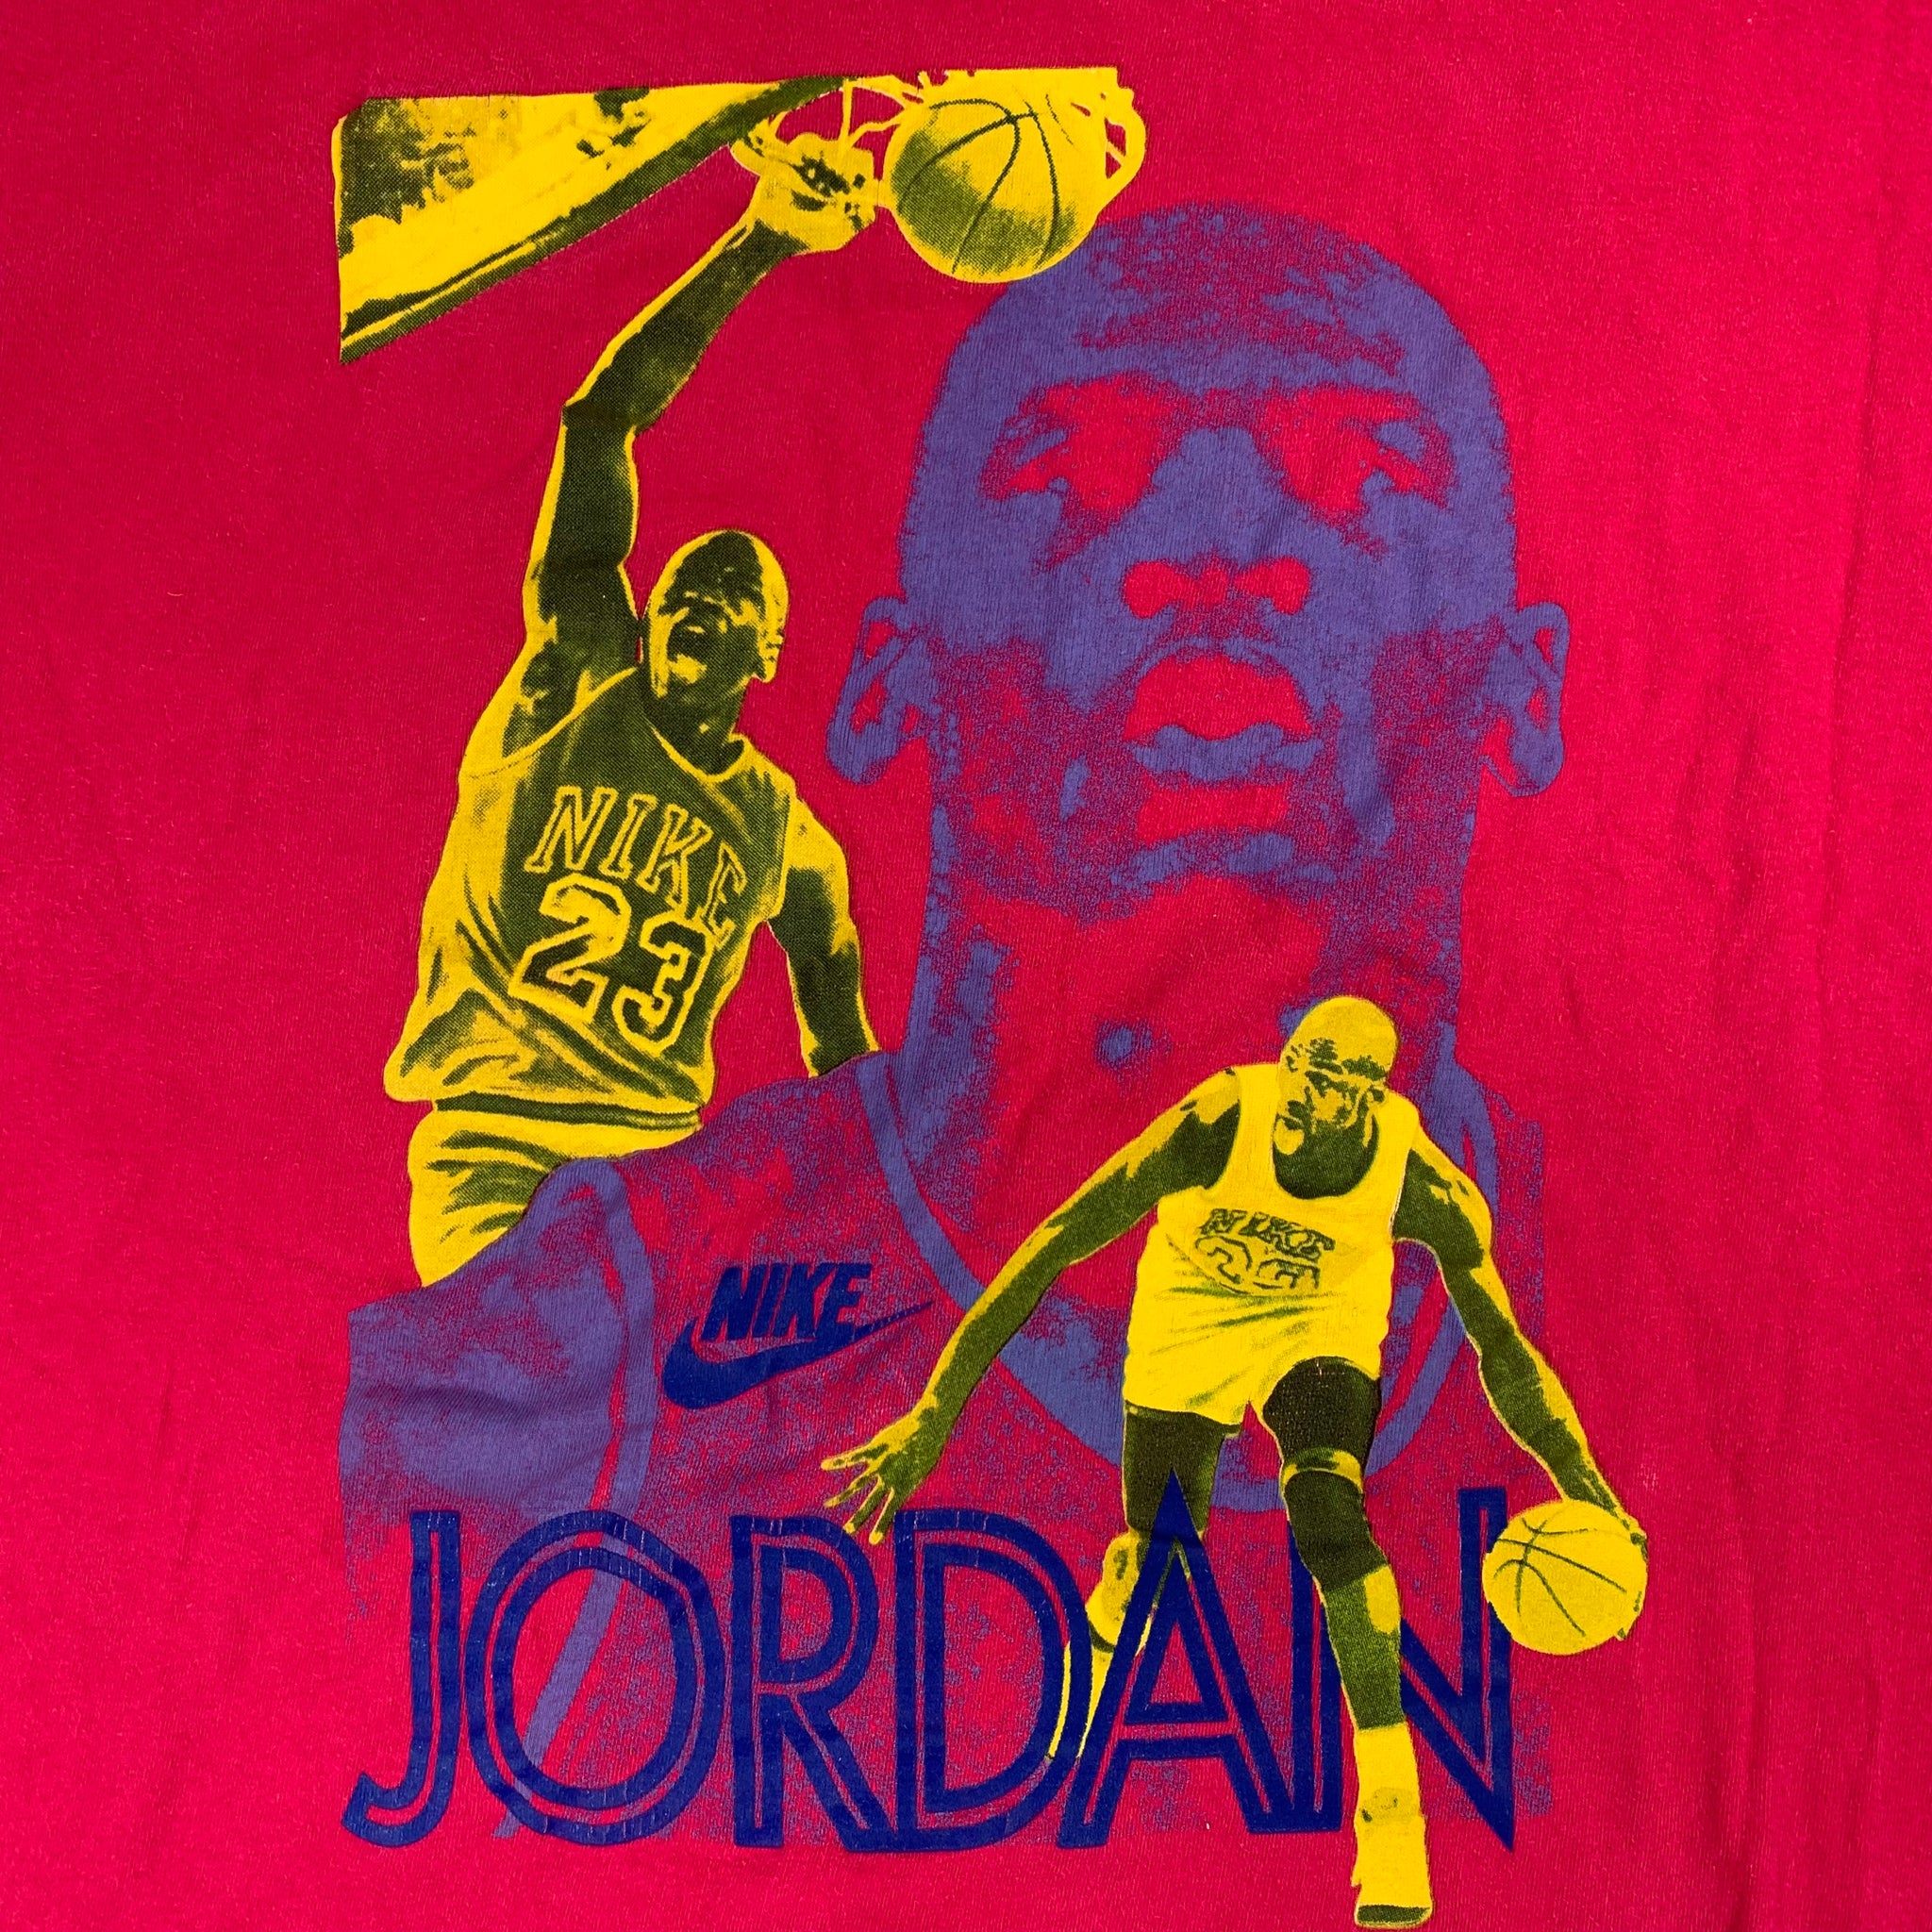 Vintage Nike NBA Chicago Bulls Michael Jordan Jersey Size XL 1990s